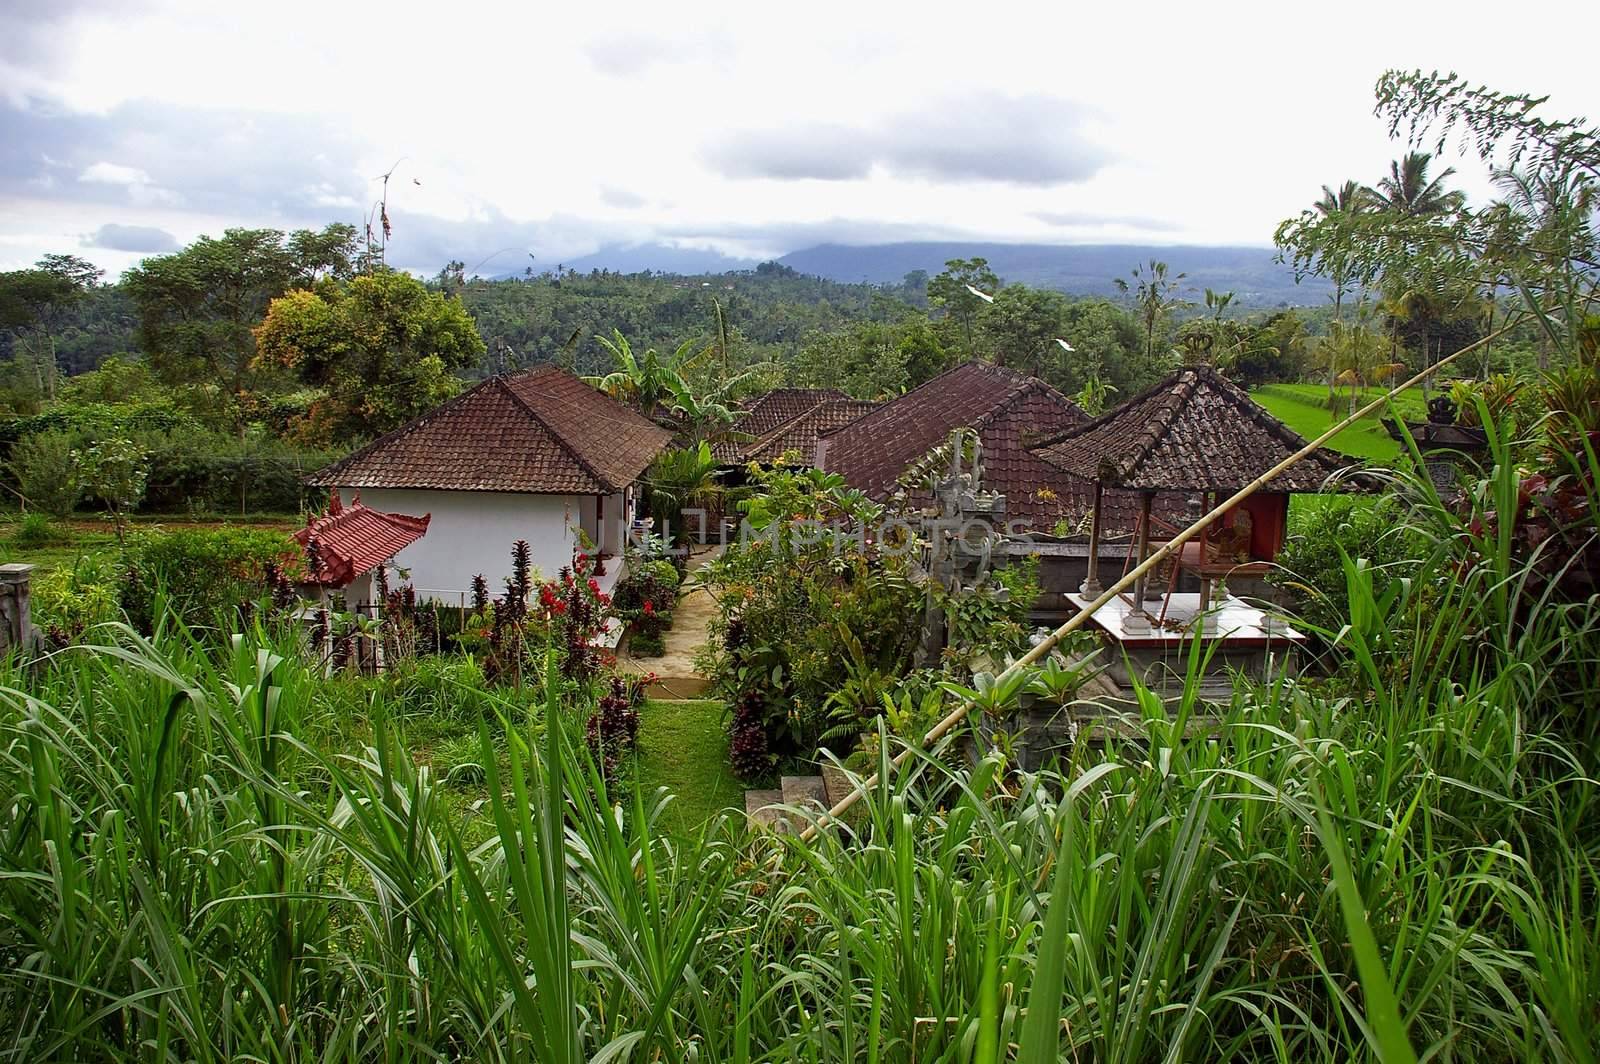 Rural village of Bali by Komar